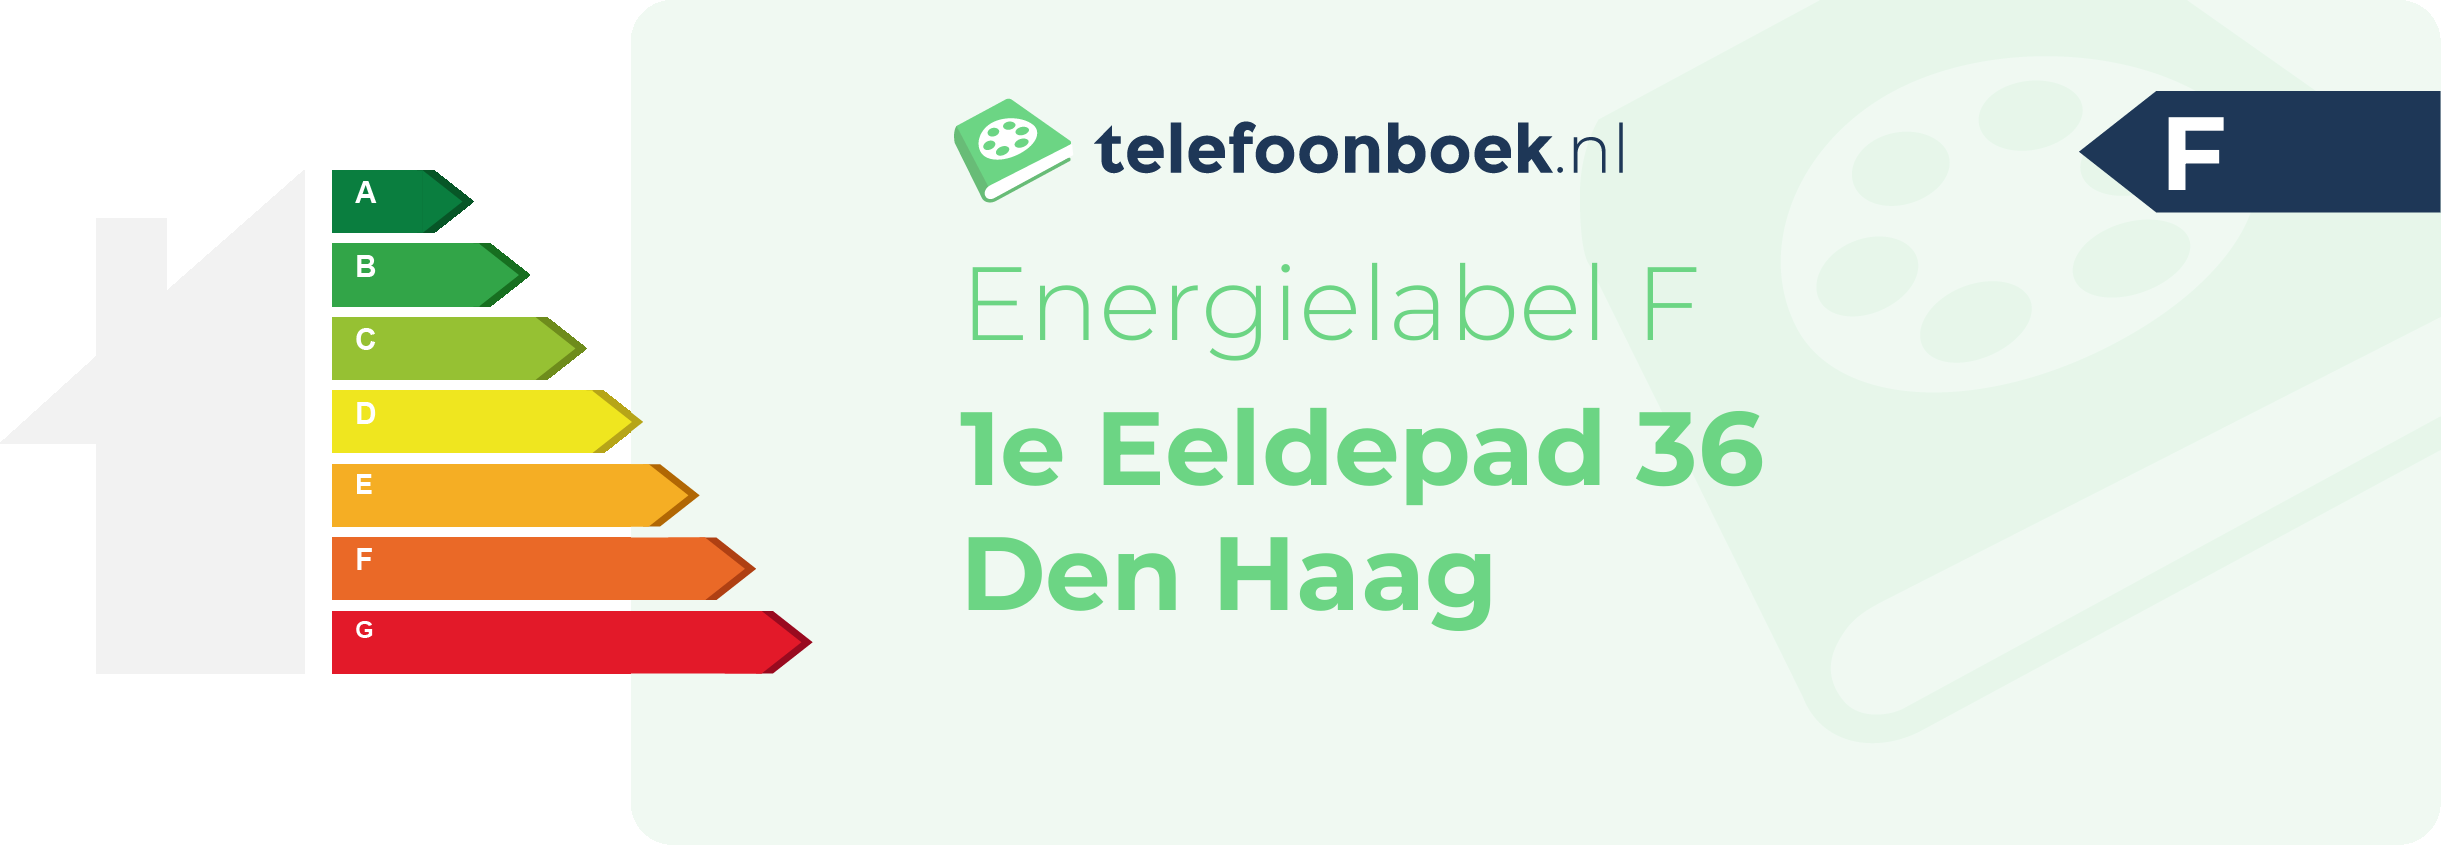 Energielabel 1e Eeldepad 36 Den Haag